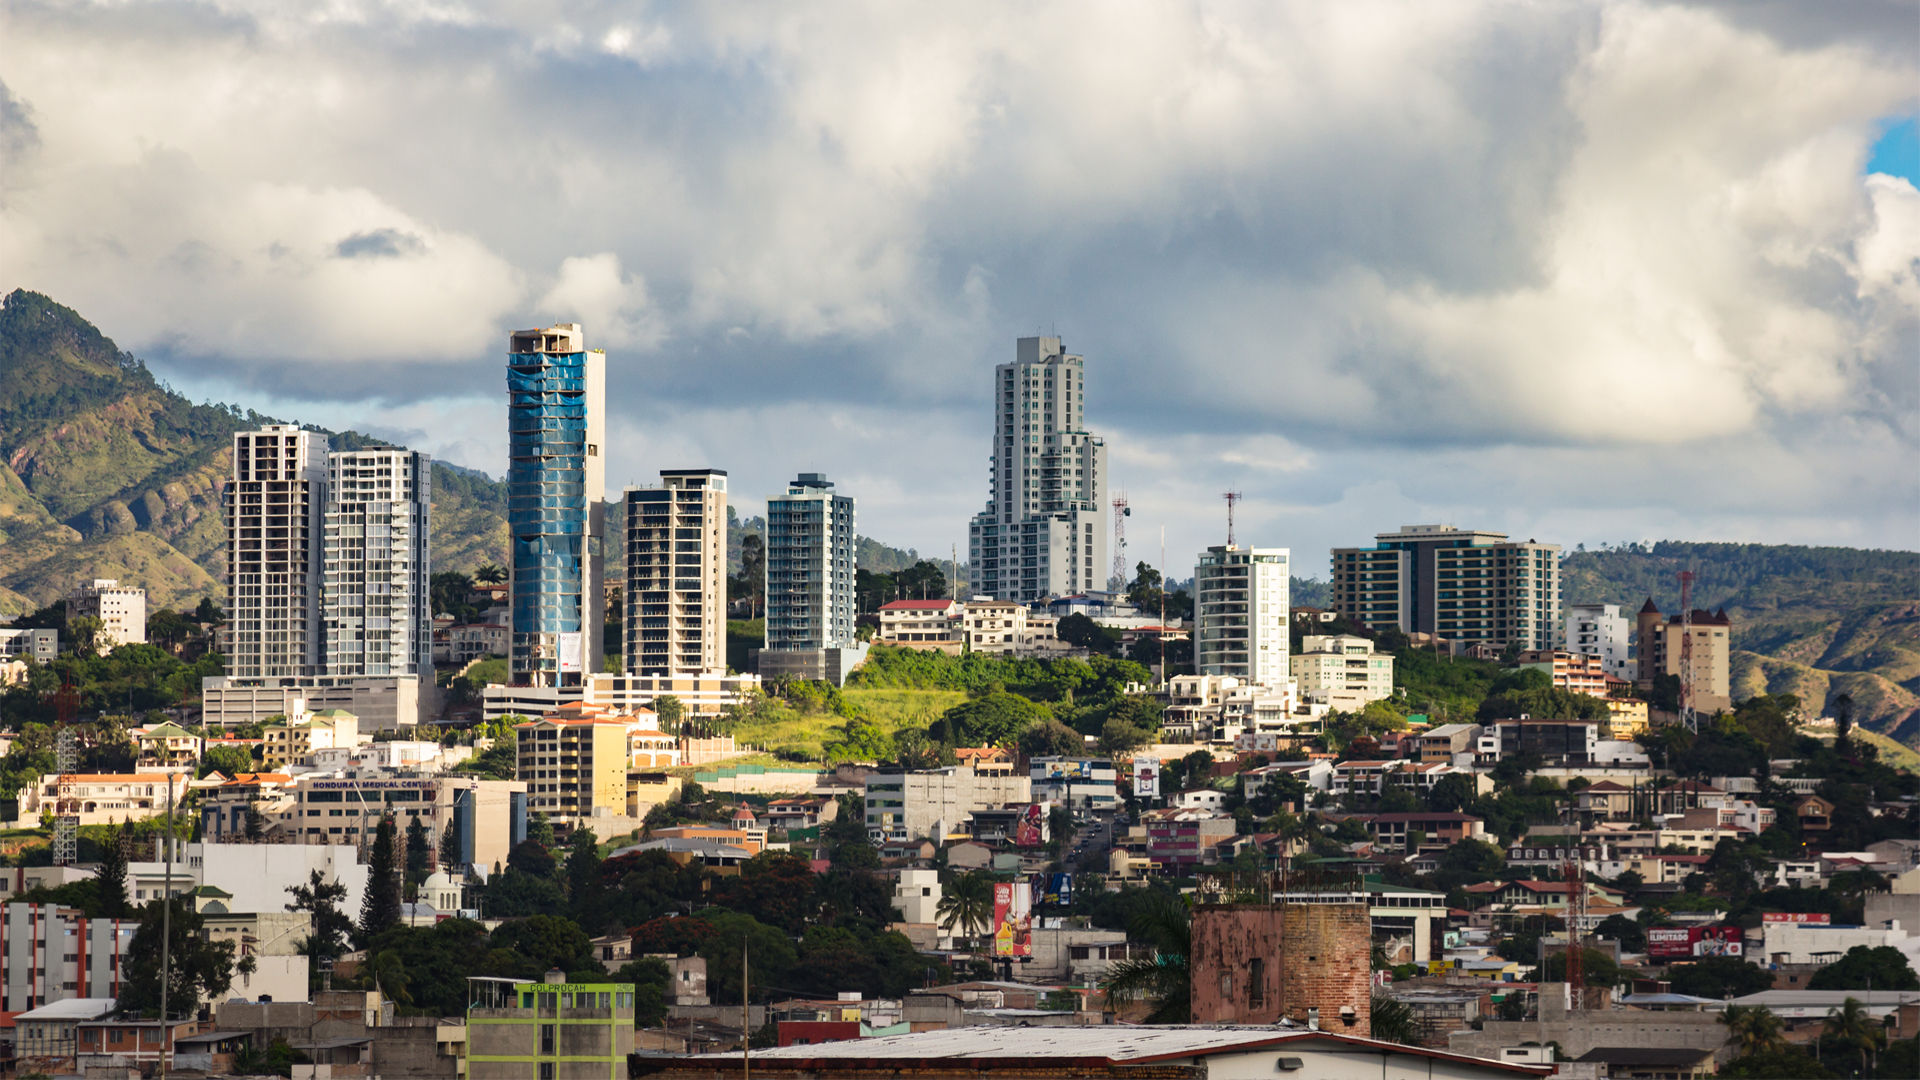 Buildings in Tegucigalpa Honduras Image for Hero Box